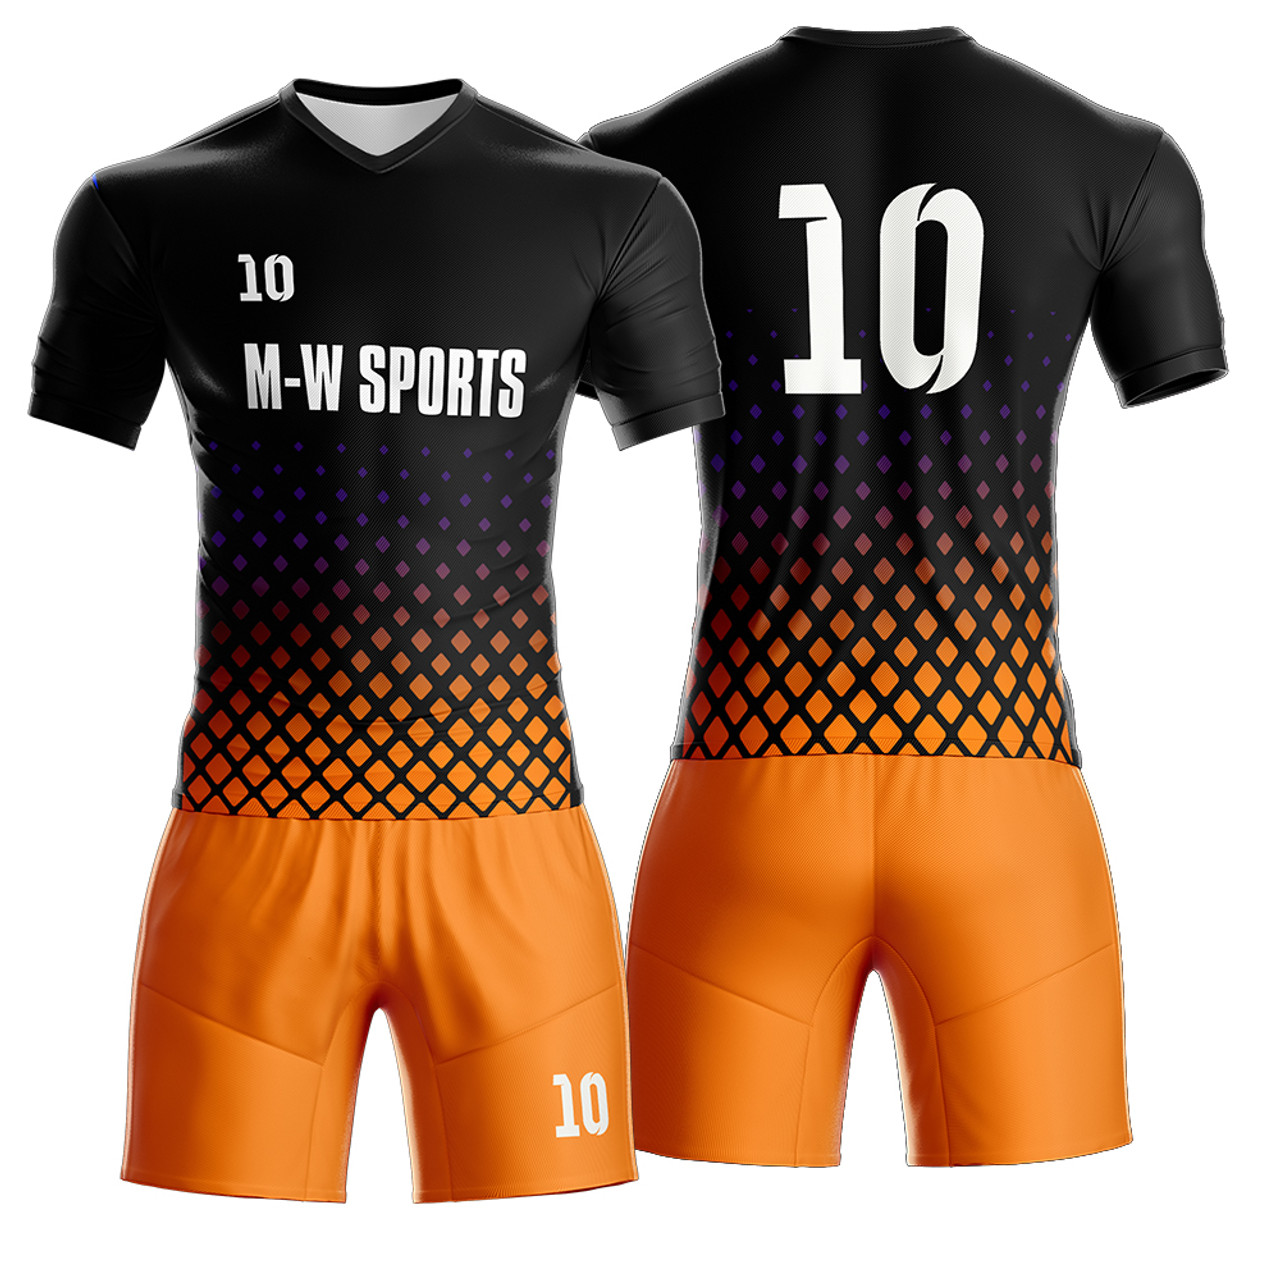 Team Uniforms - Digital Printed Team Jerseys, Sublimated Jerseys